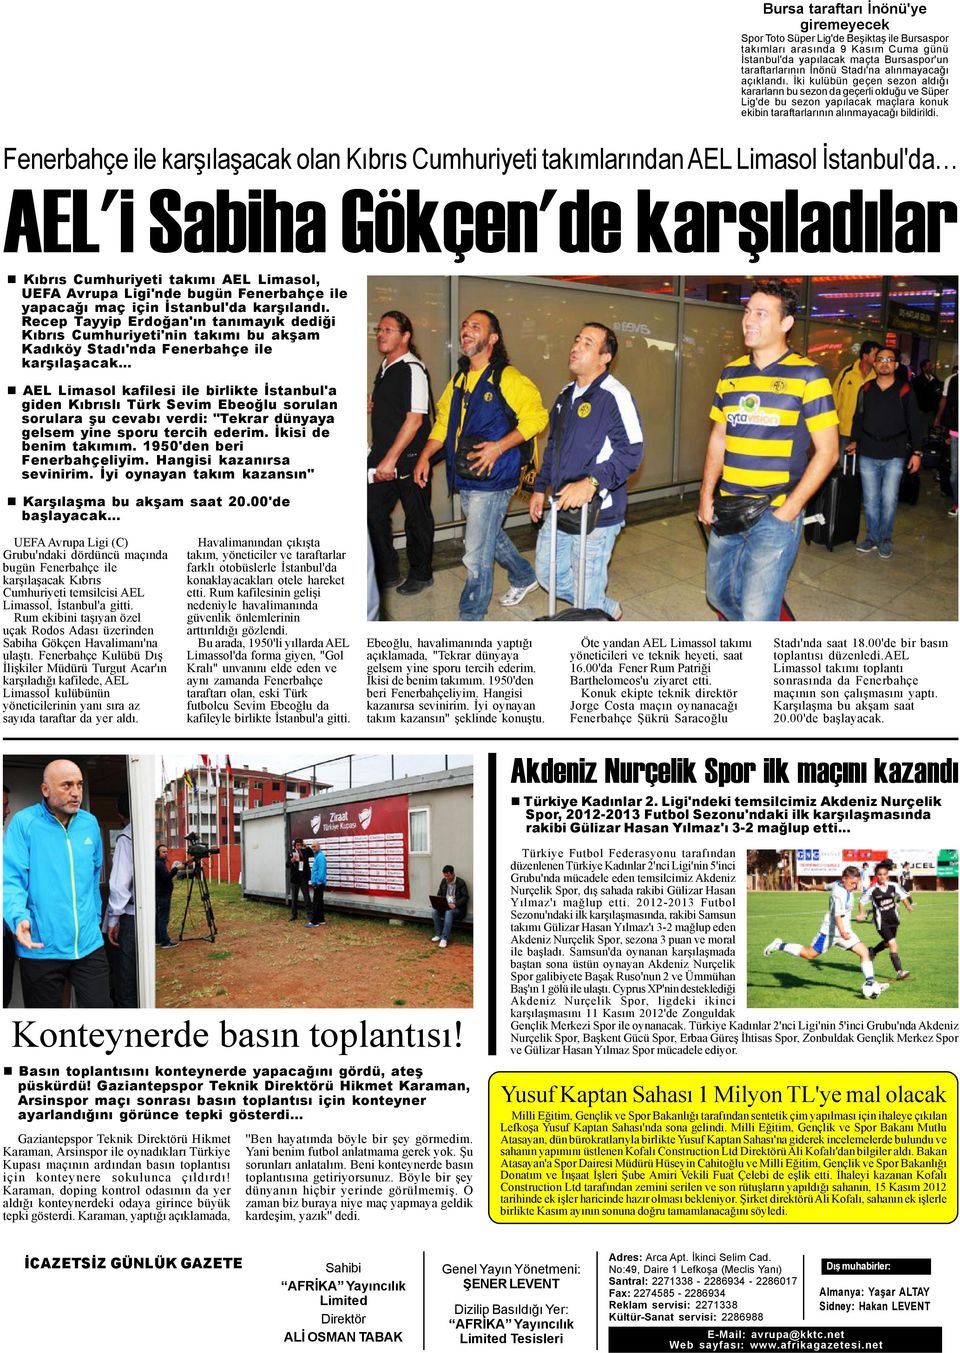 Fenerbahçe ile karþýlaþacak olan Kýbrýs Cumhuriyeti takýmlarýndan AEL Limasol Ýstanbul'da AEL'i Sabiha Gökçen'de karþýladýlar Kýbrýs Cumhuriyeti takýmý AEL Limasol, UEFA Avrupa Ligi'nde bugün